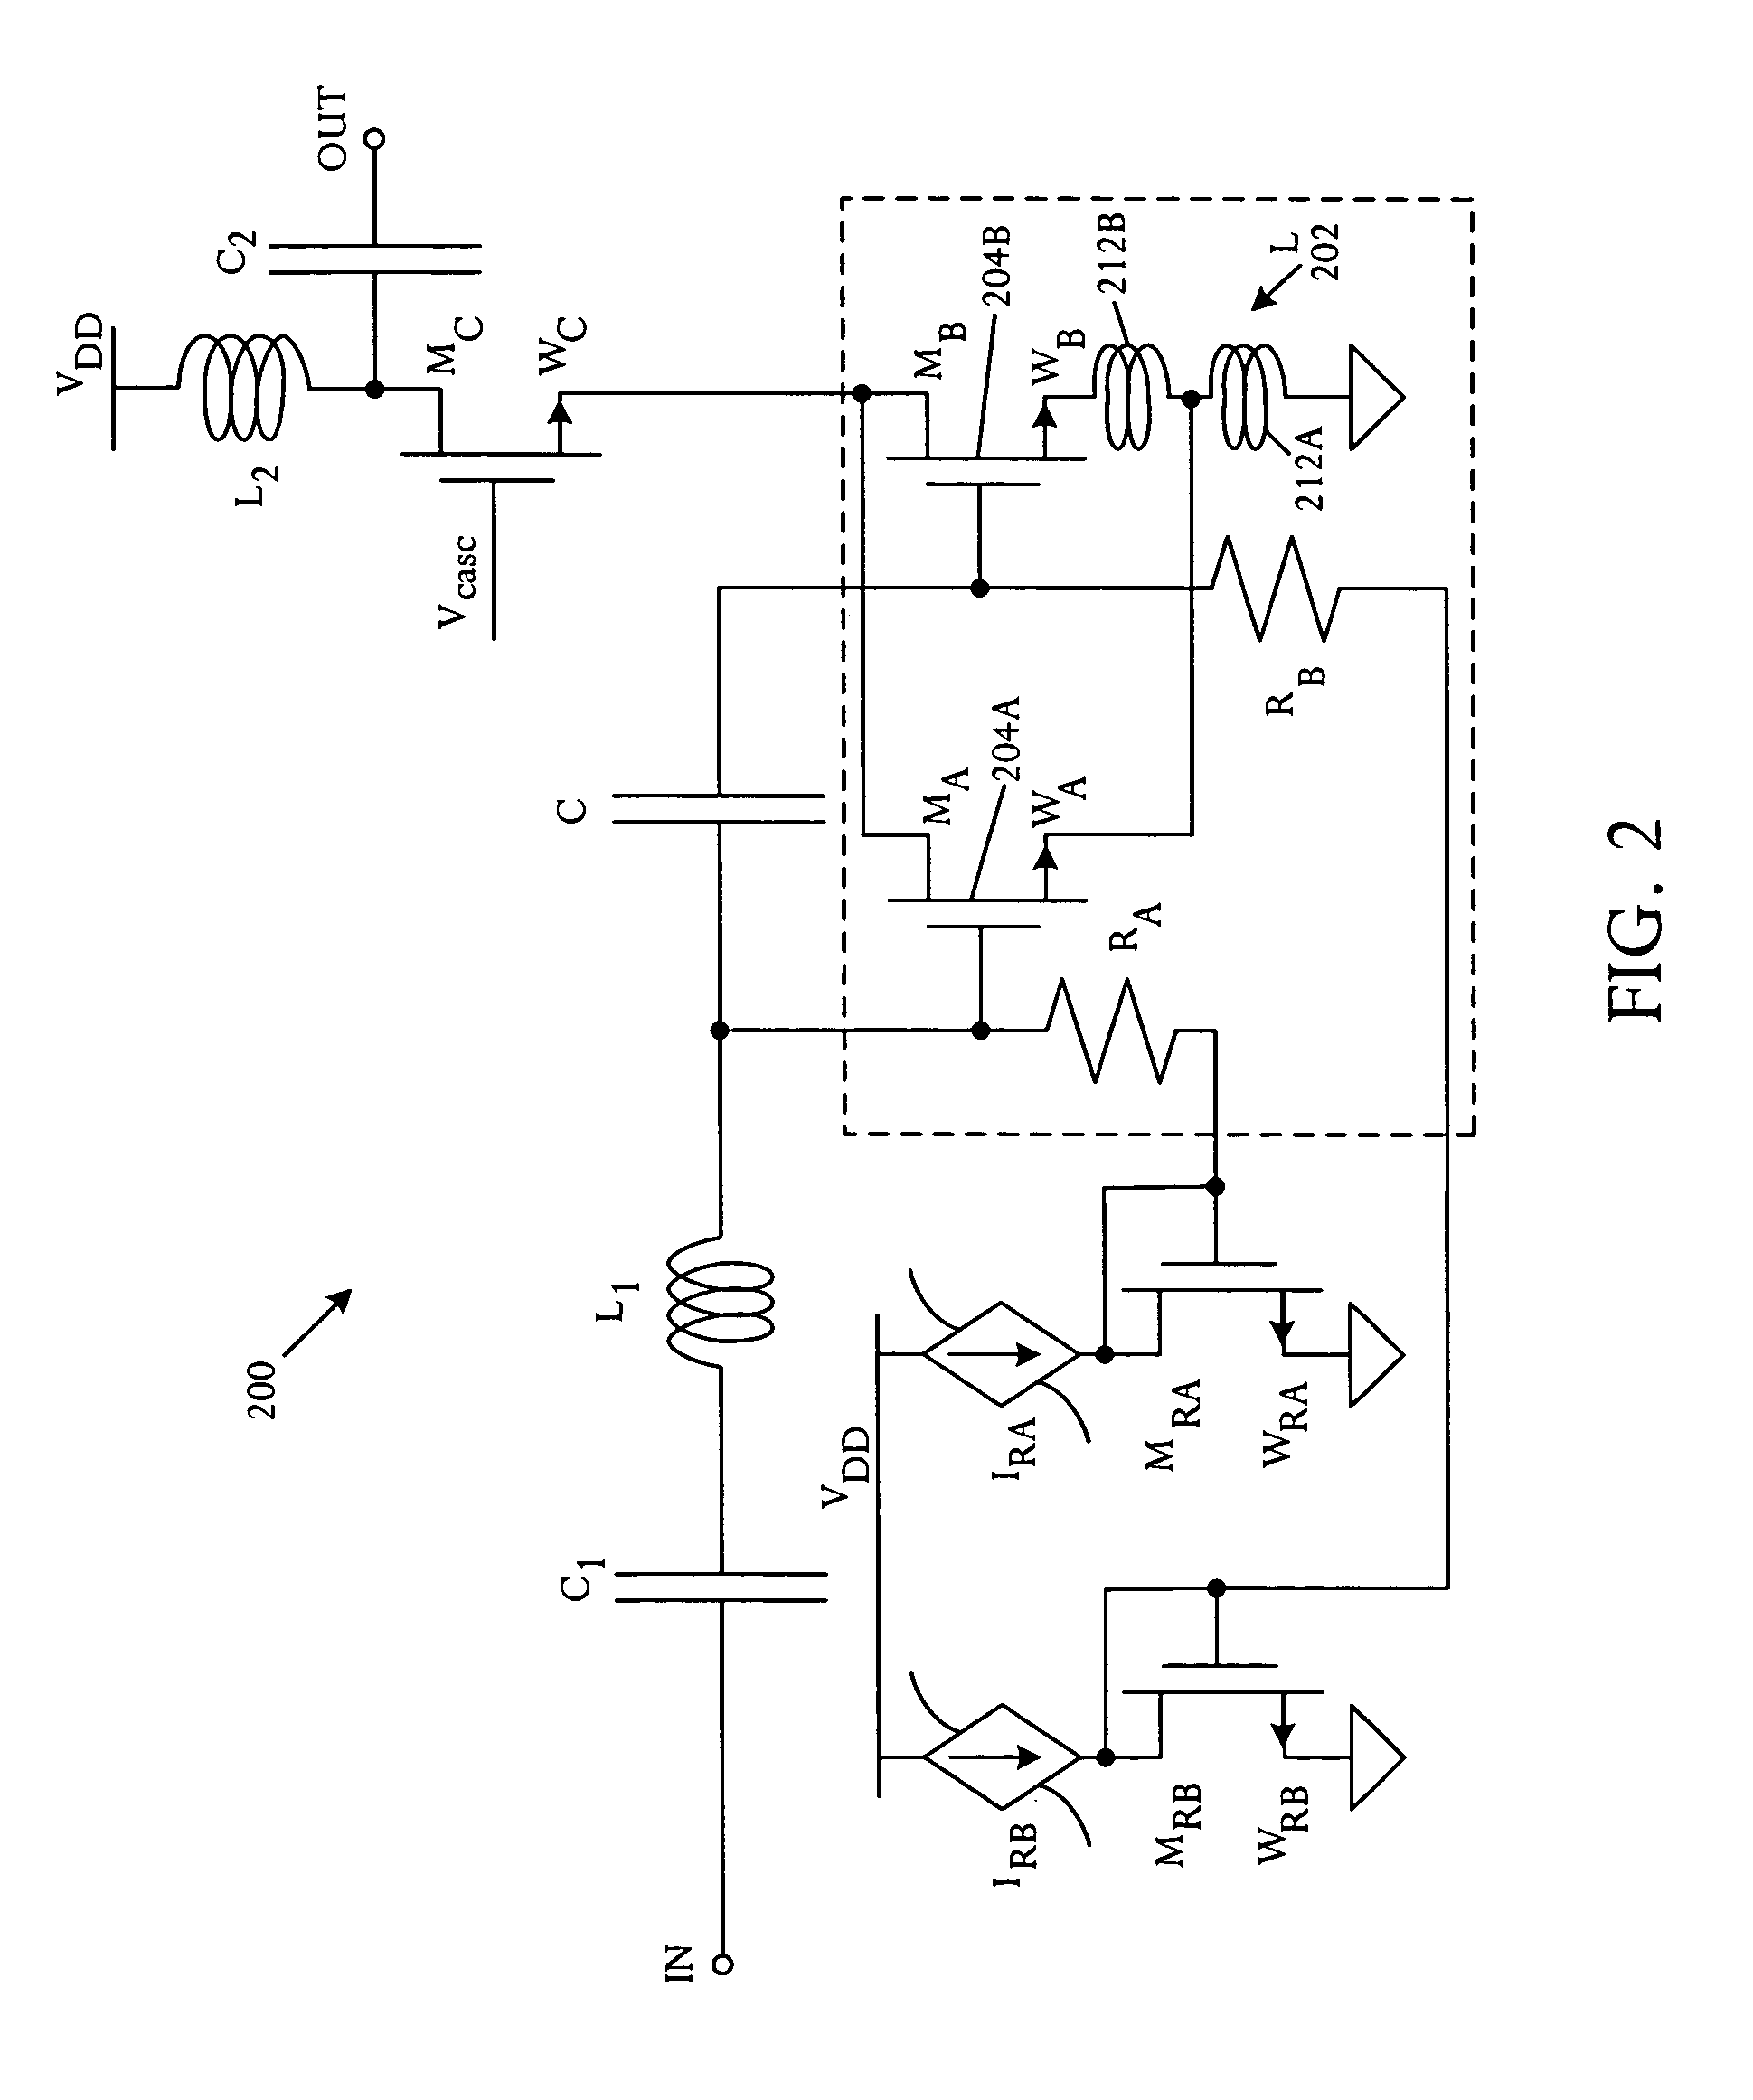 Field effect transistor amplifier with linearization